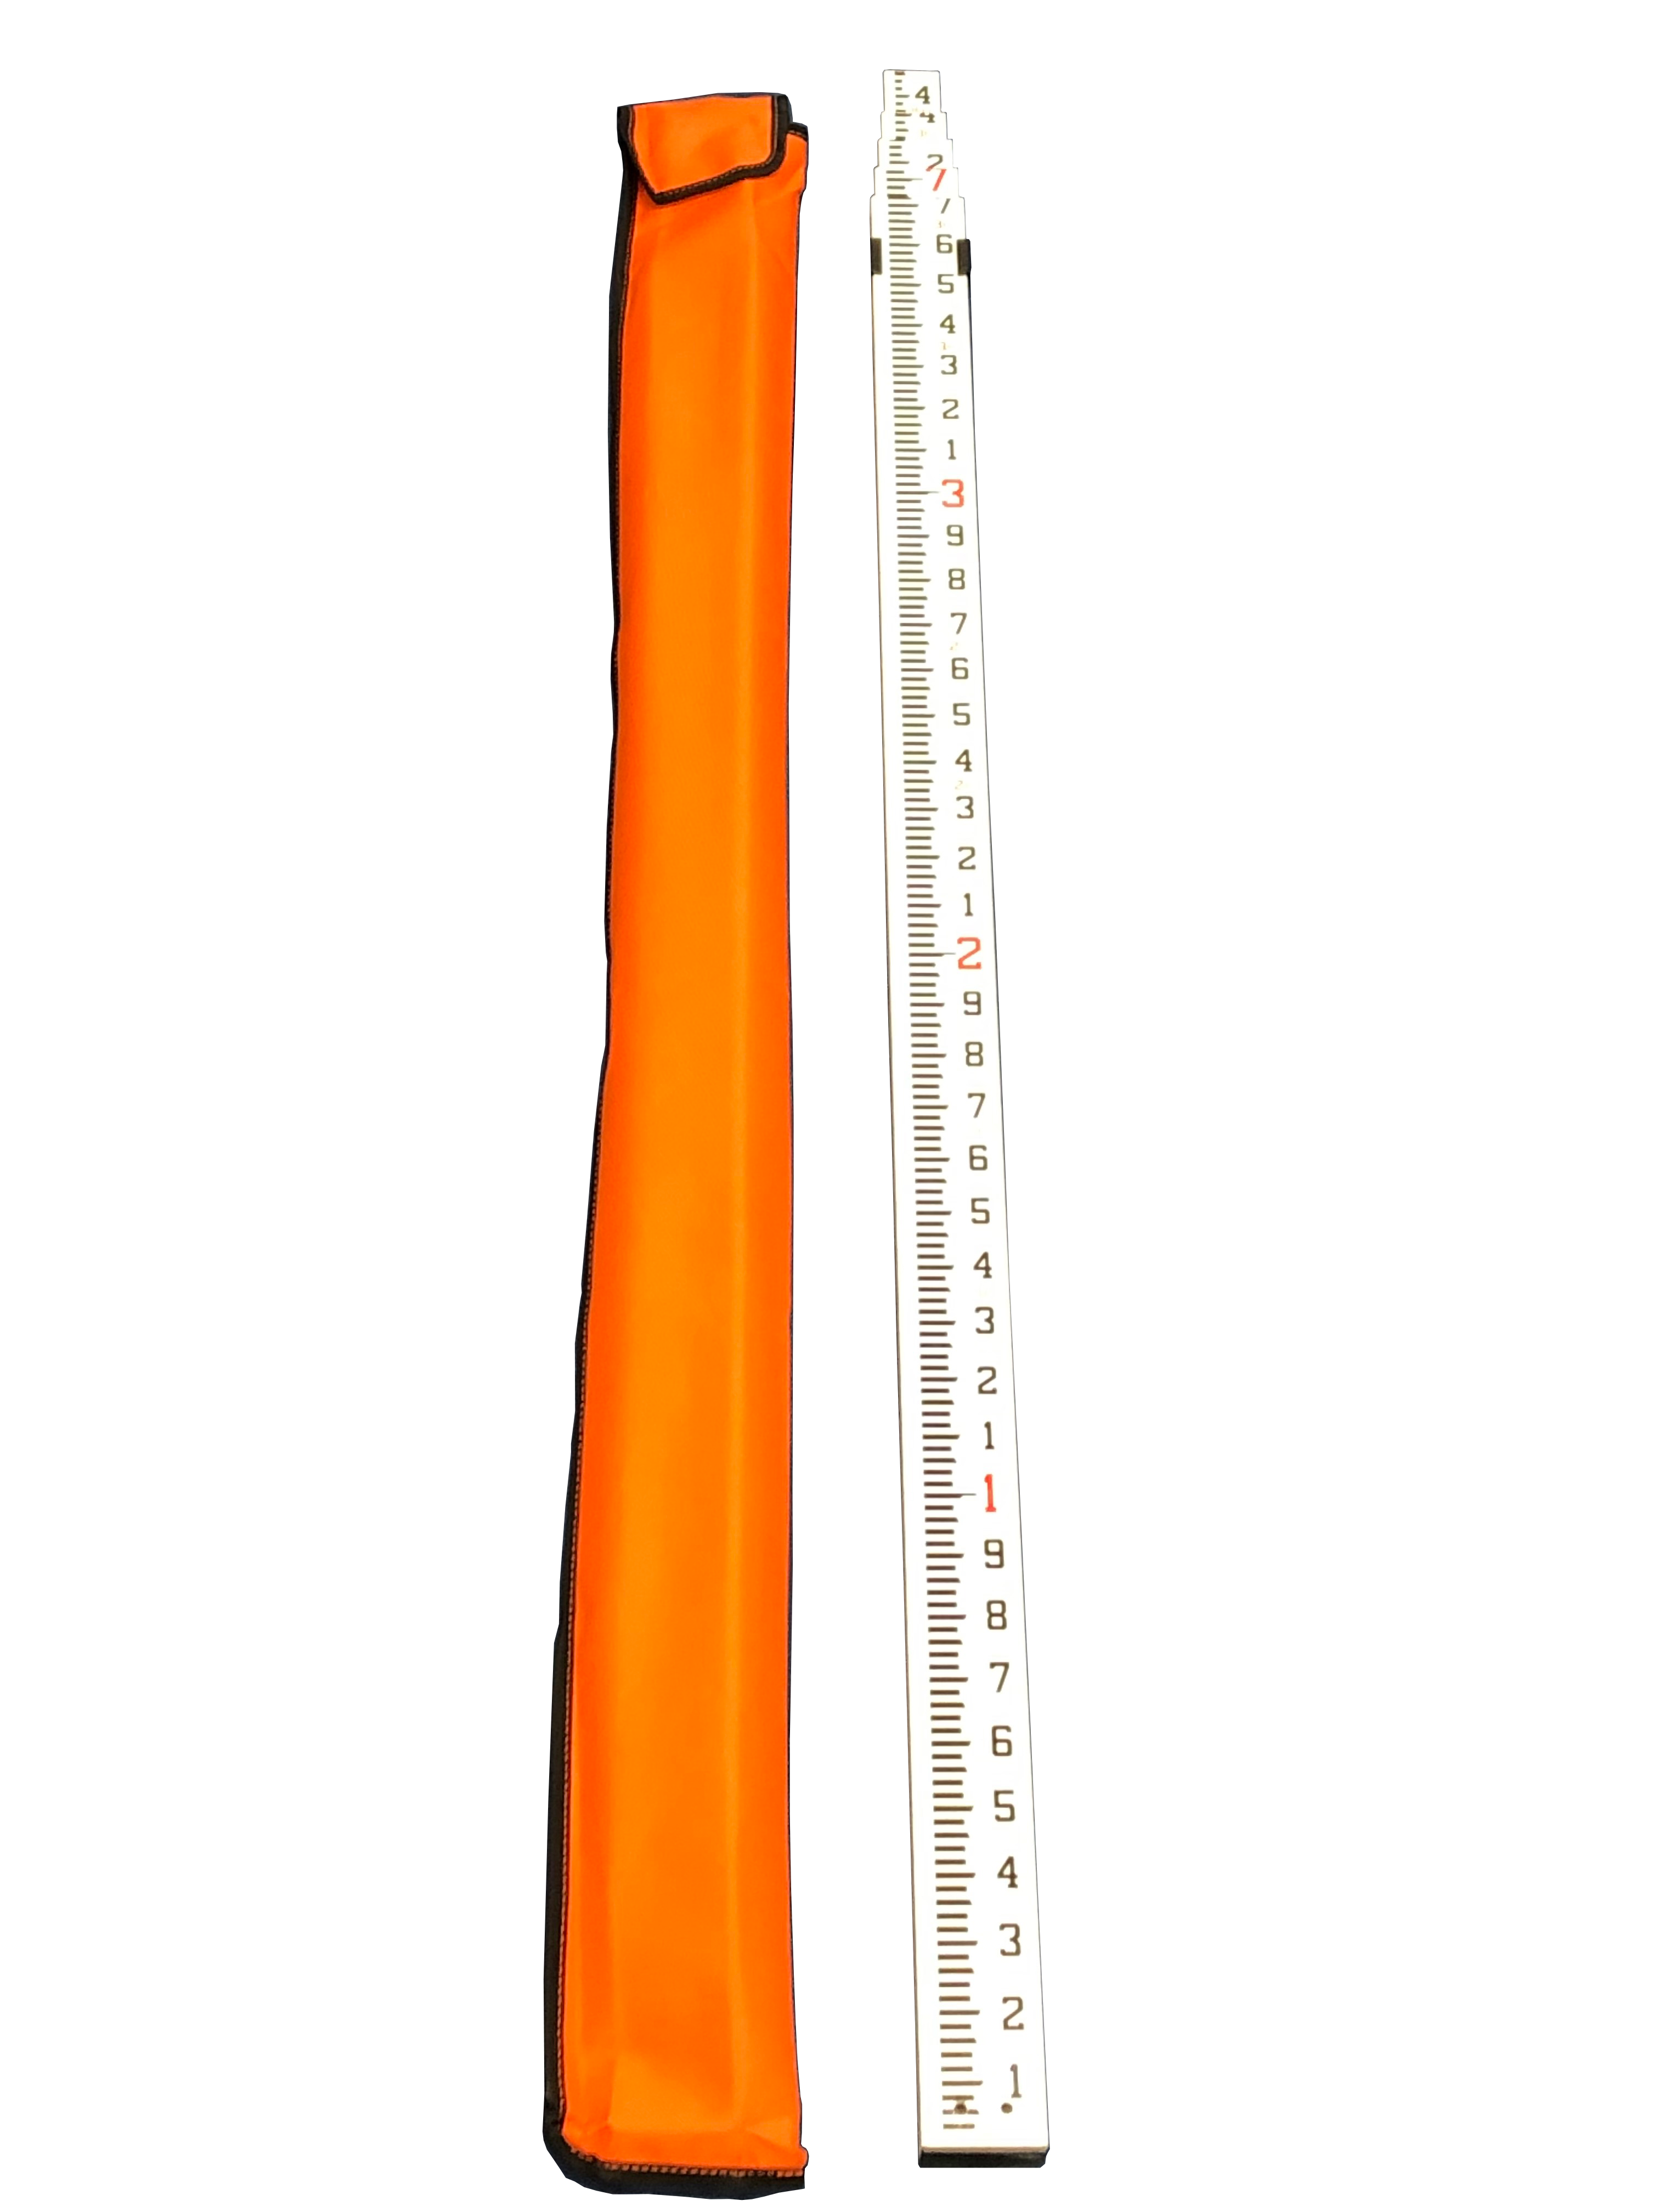 Sokkia 809103 16' Fiberglass Rod w/ Carry Bag & Rod Level (feet/10ths)